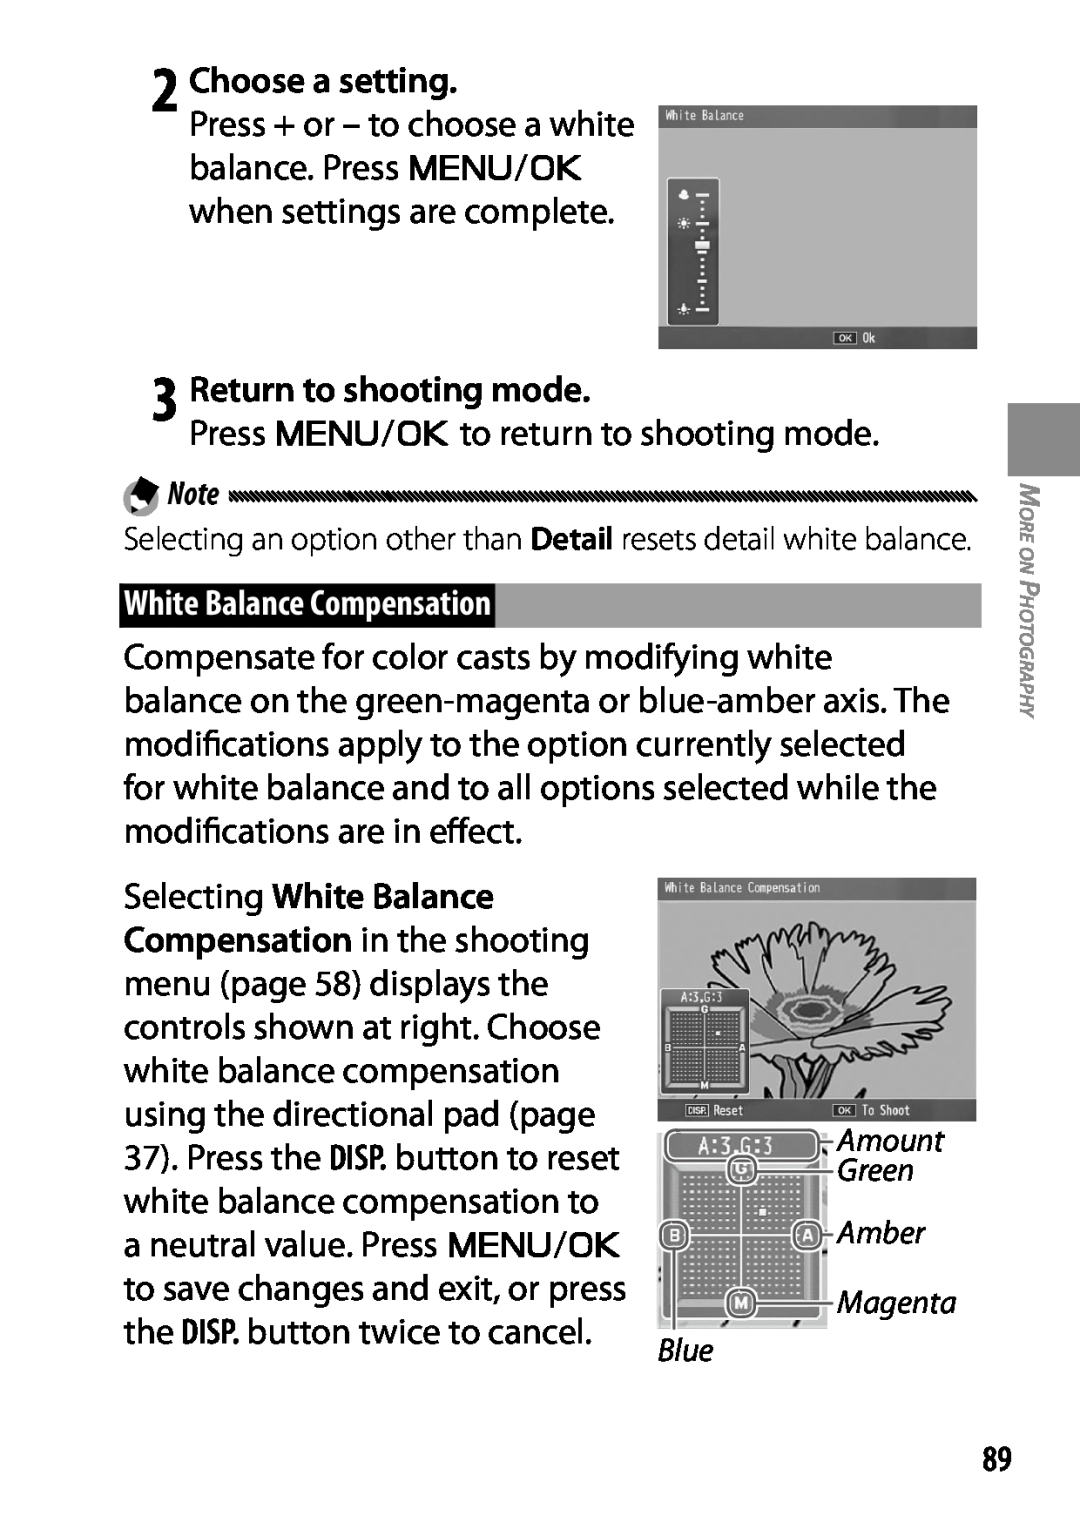 Ricoh 170553, GXR manual 2 Choose a setting, White Balance Compensation, Selecting White Balance, 3 Return to shooting mode 